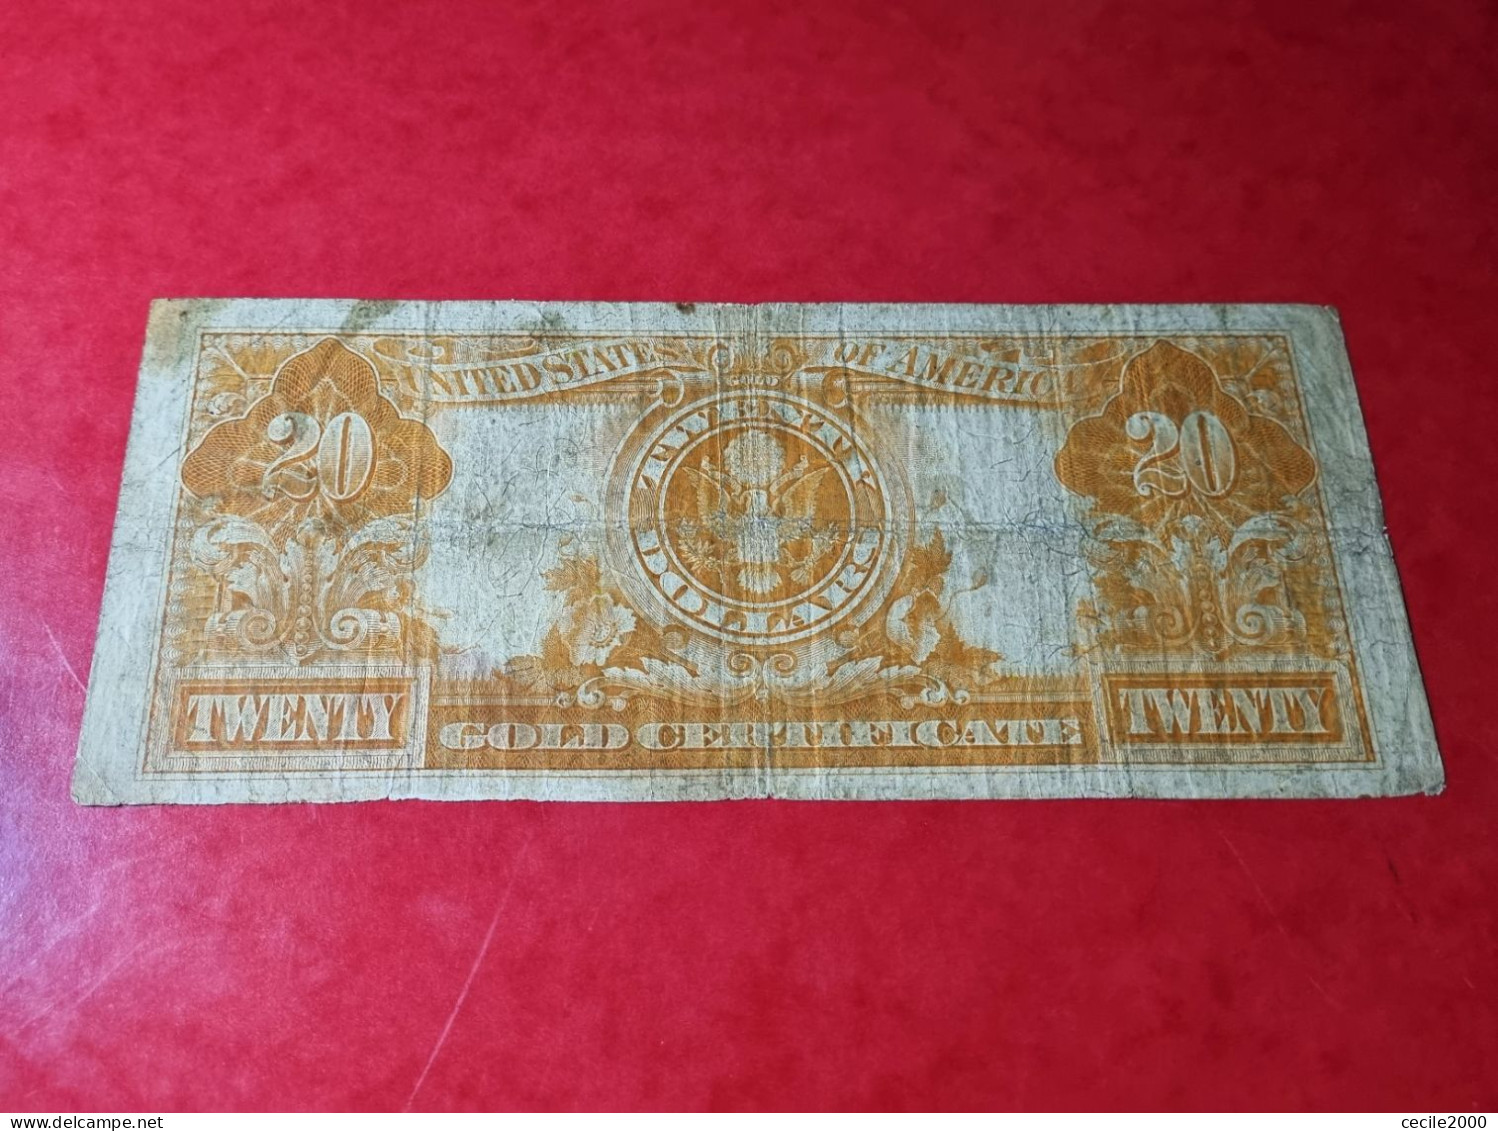 1922 USA $20 DOLLARS *GOLD CERTIFICATE* UNITED STATES BANKNOTE F/F+ BILLETE ESTADOS UNIDOS *COMPRAS MULTIPLES CONSULTAR* - Gold Certificates (1882-1922)